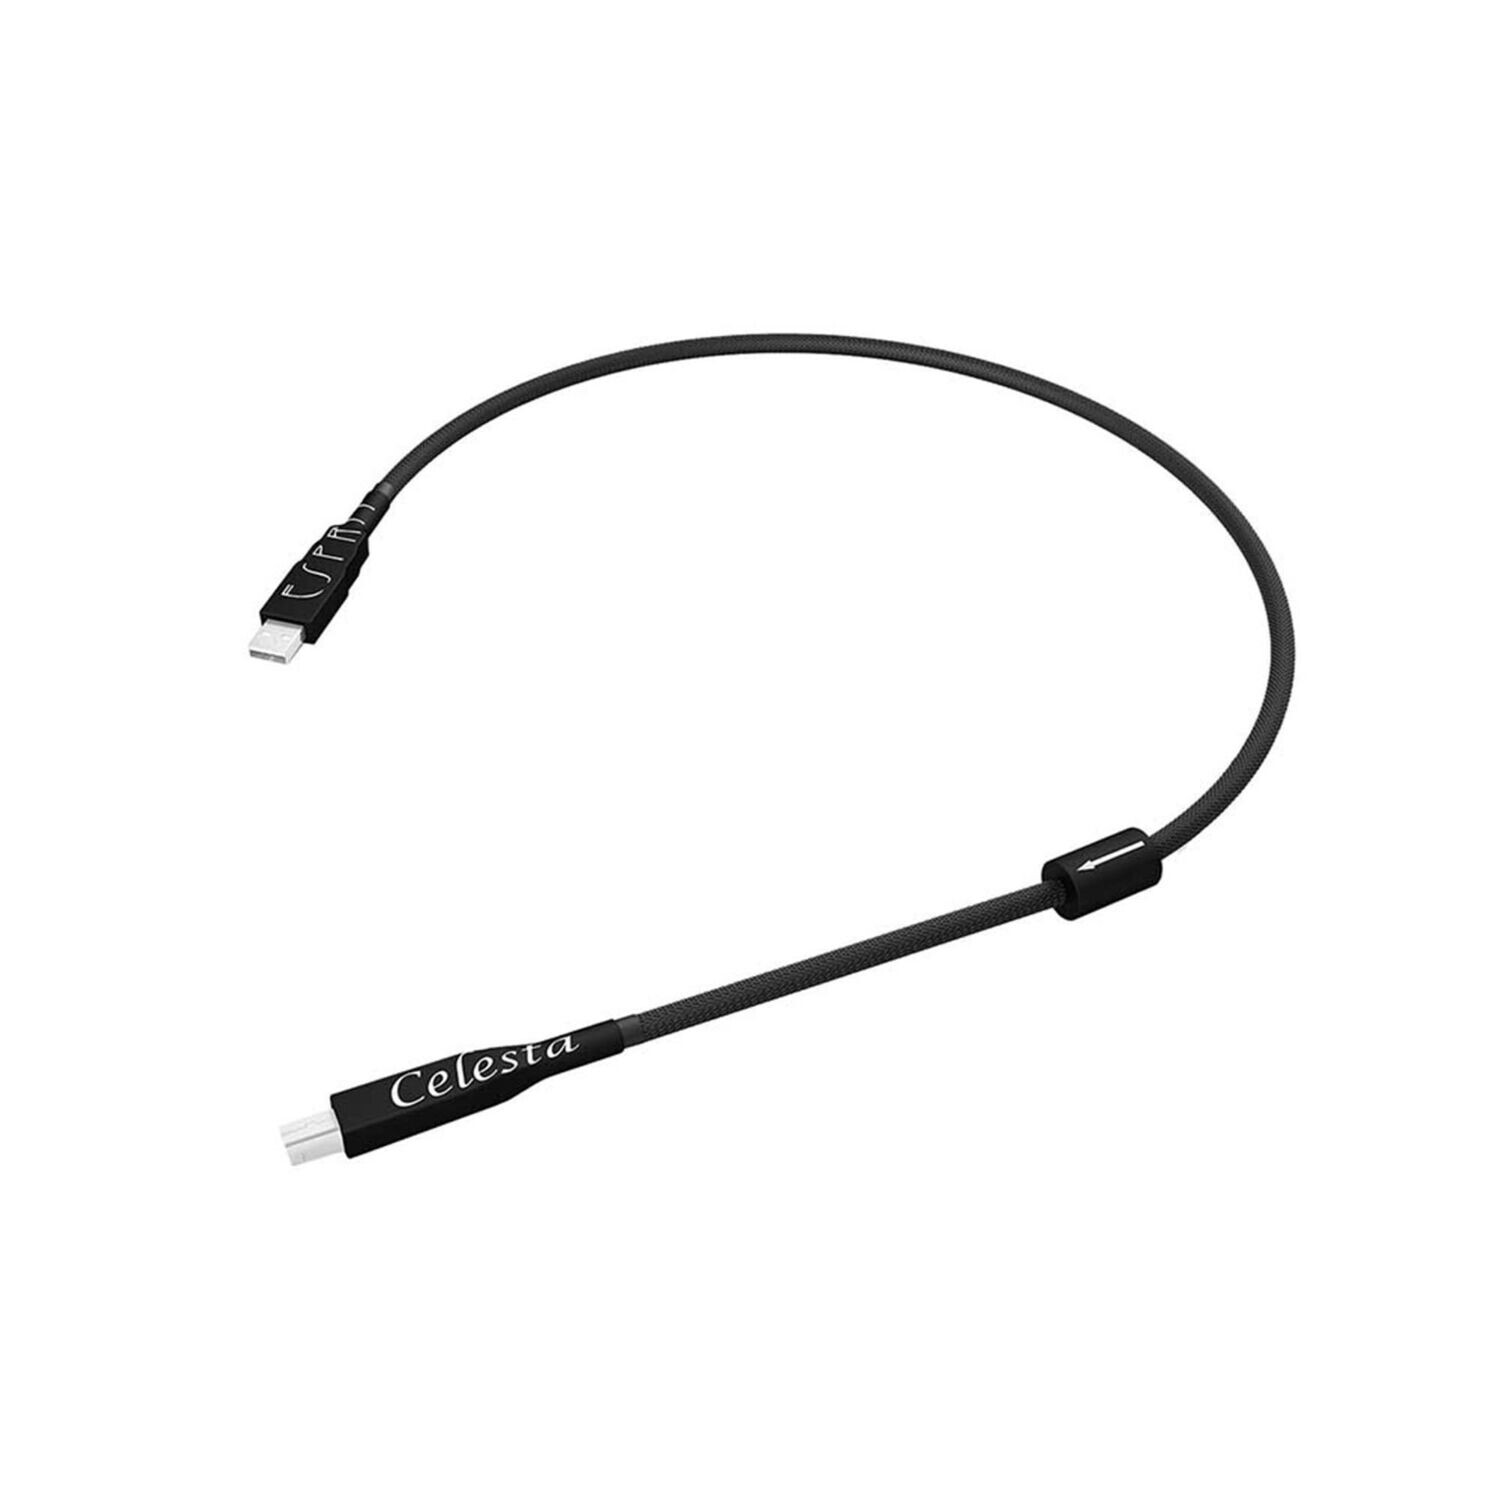 ESPRIT Celesta Digital USB Cable, Length: 1.00 m